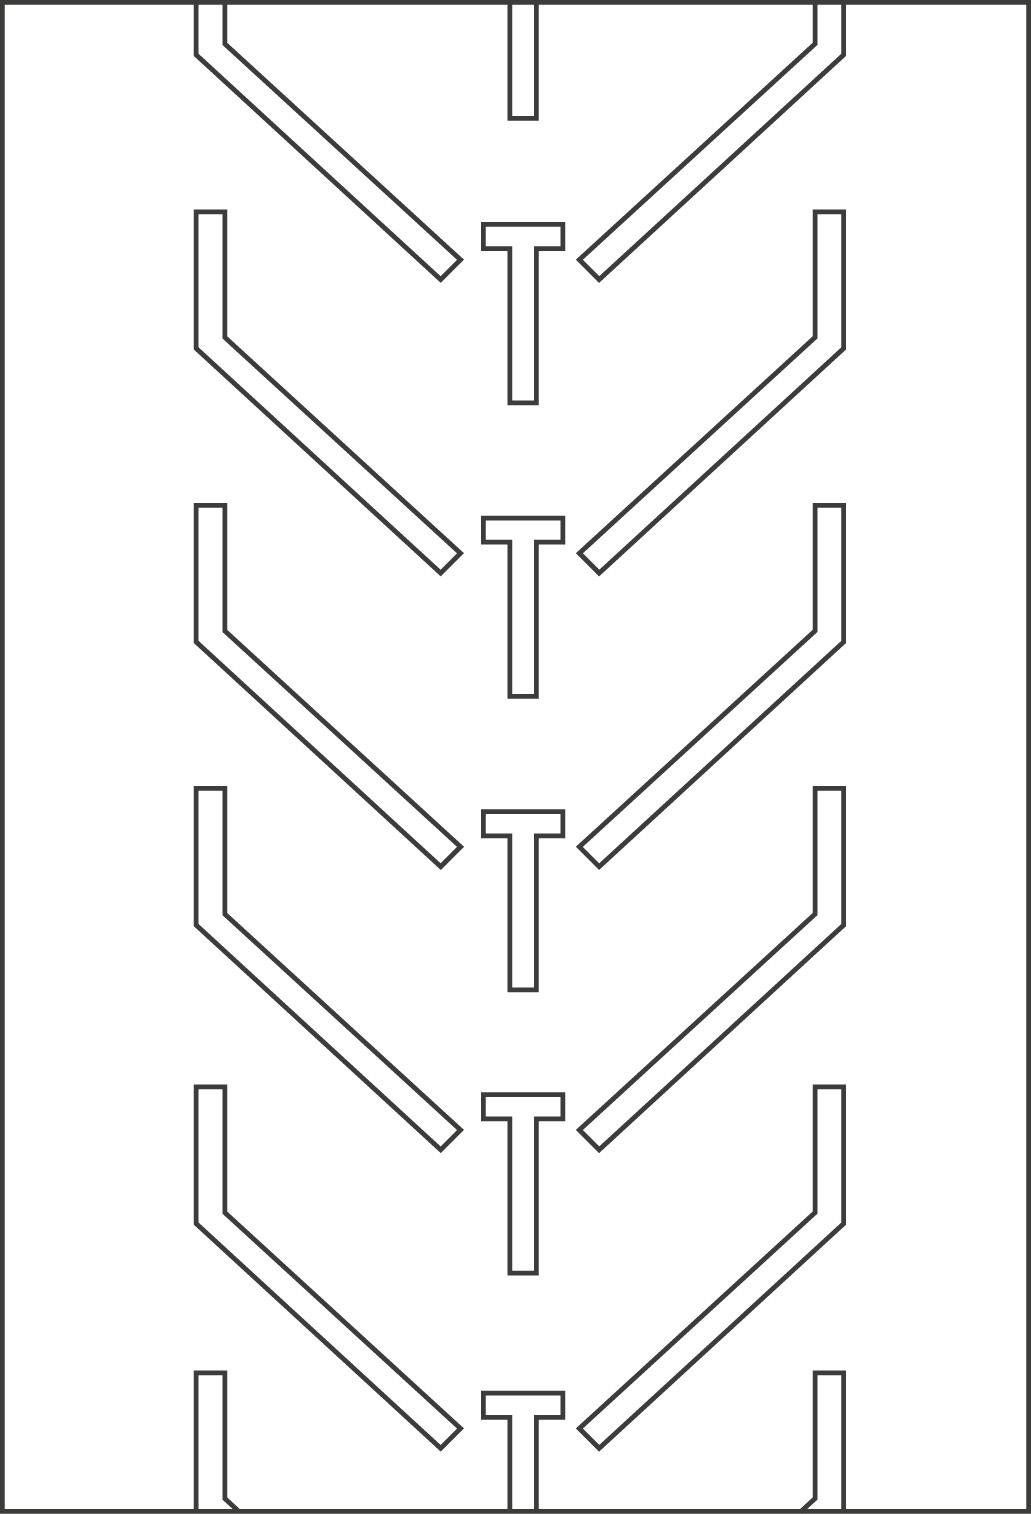 Cleated V Type Ep Rubber Chevron Belt Patterned Conveyor Belting